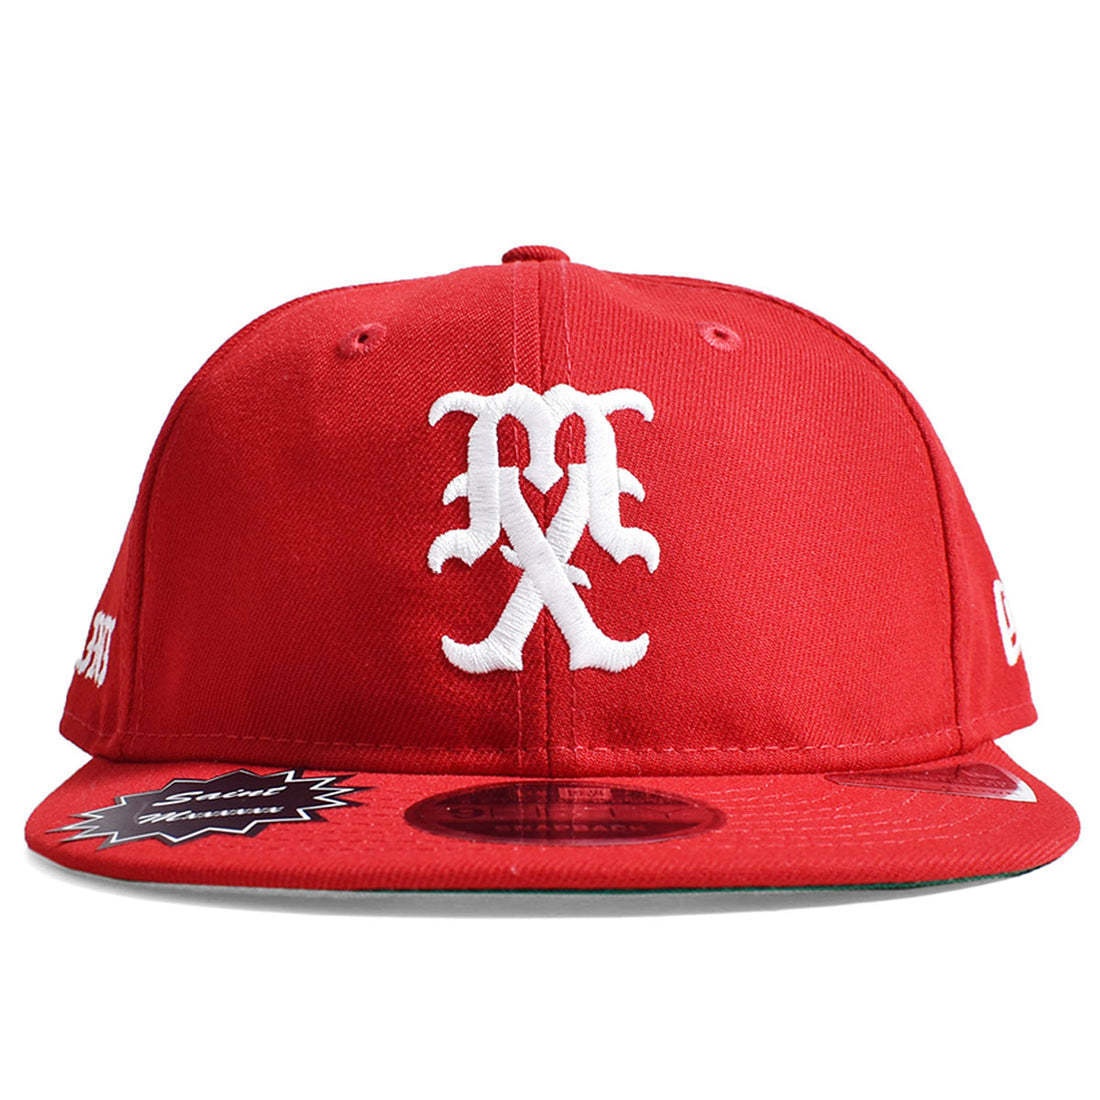 RETRO CROWN 9FIFTY MX LOGO CAP (RED) - 1